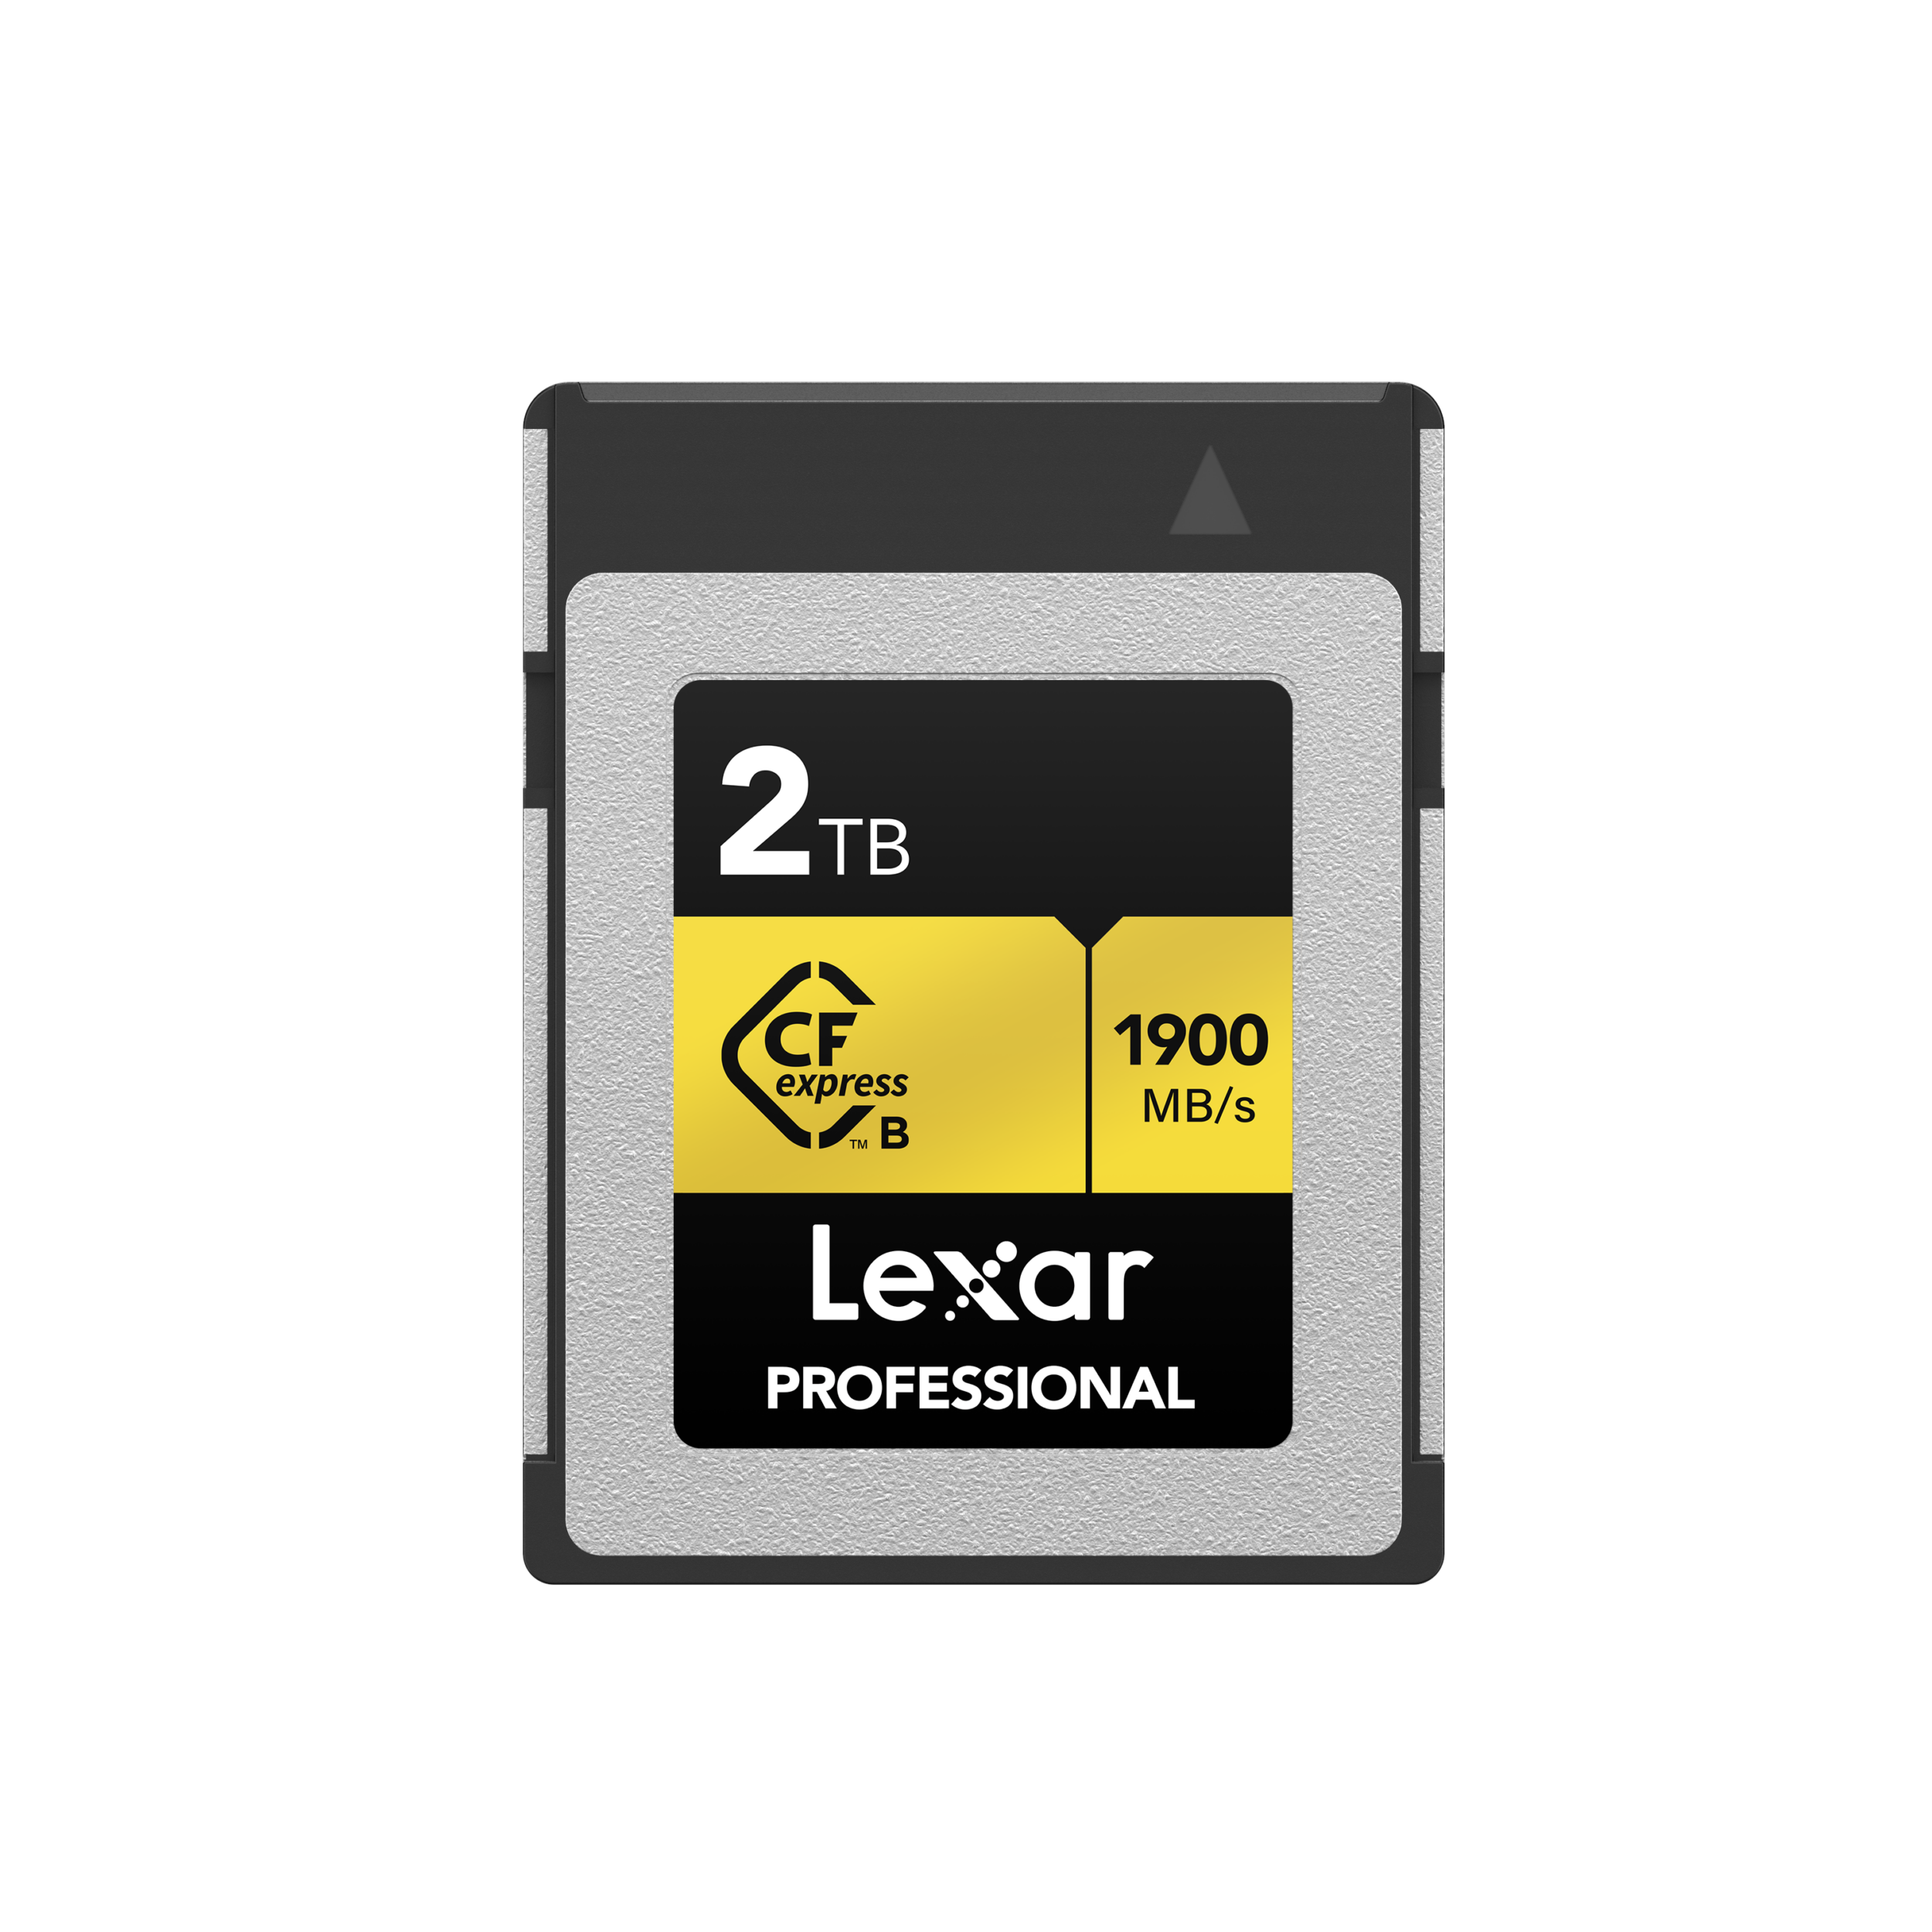 Lexar Announces Performance Enhancements for Memory Card Lineup, New Dual-Card Reader -